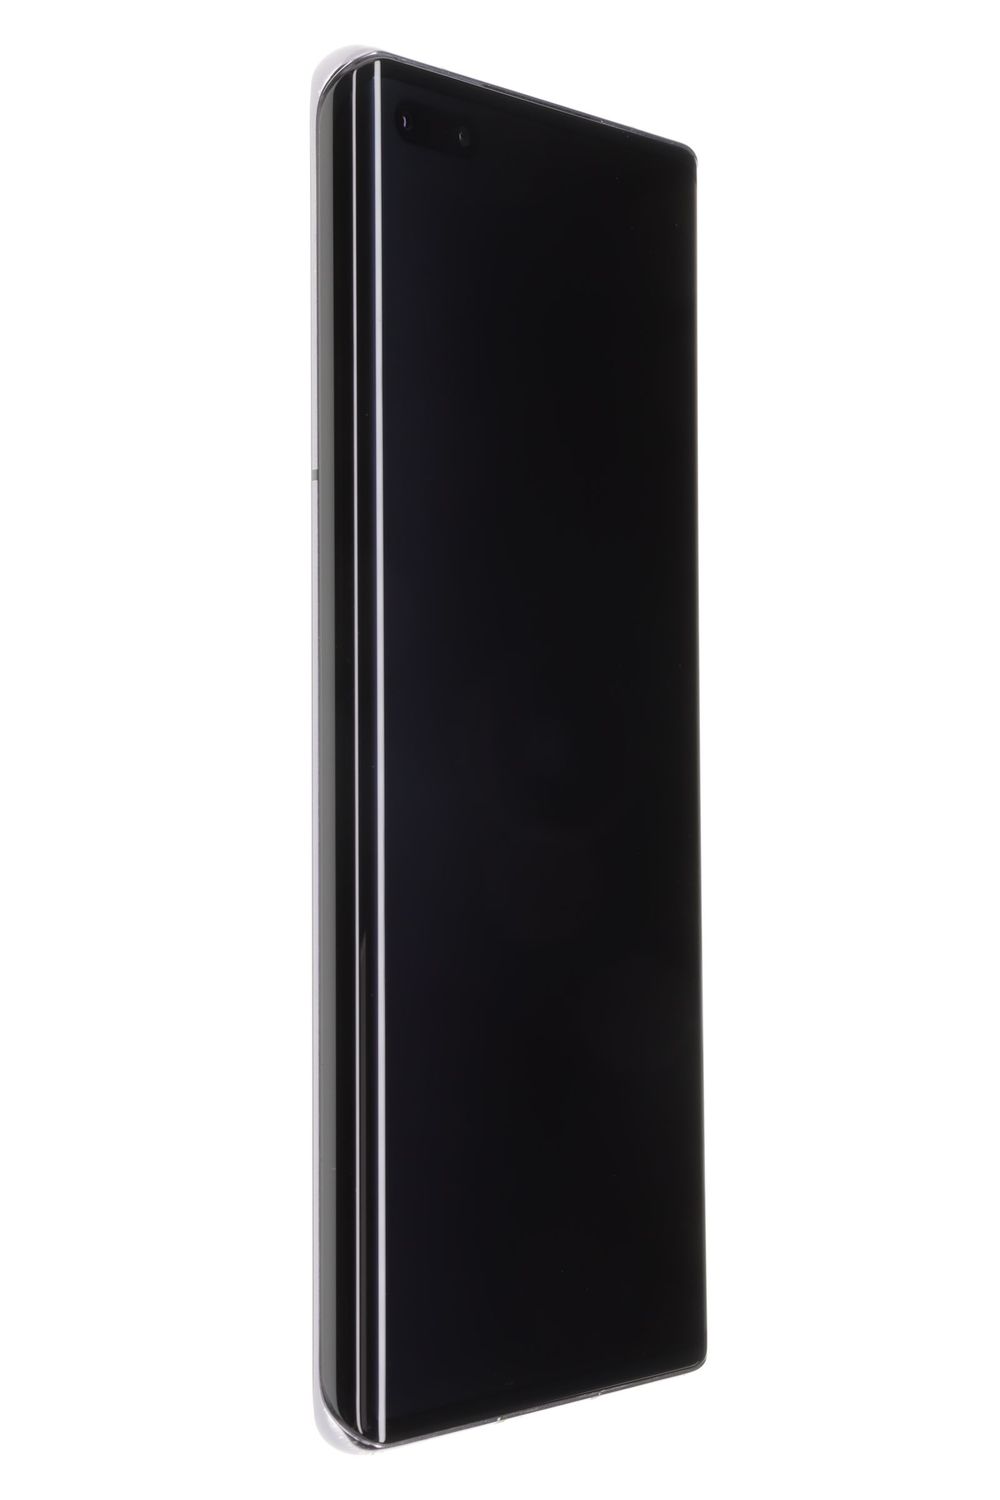 Mobiltelefon Huawei Mate 40 Pro Dual Sim, Black, 256 GB, Excelent